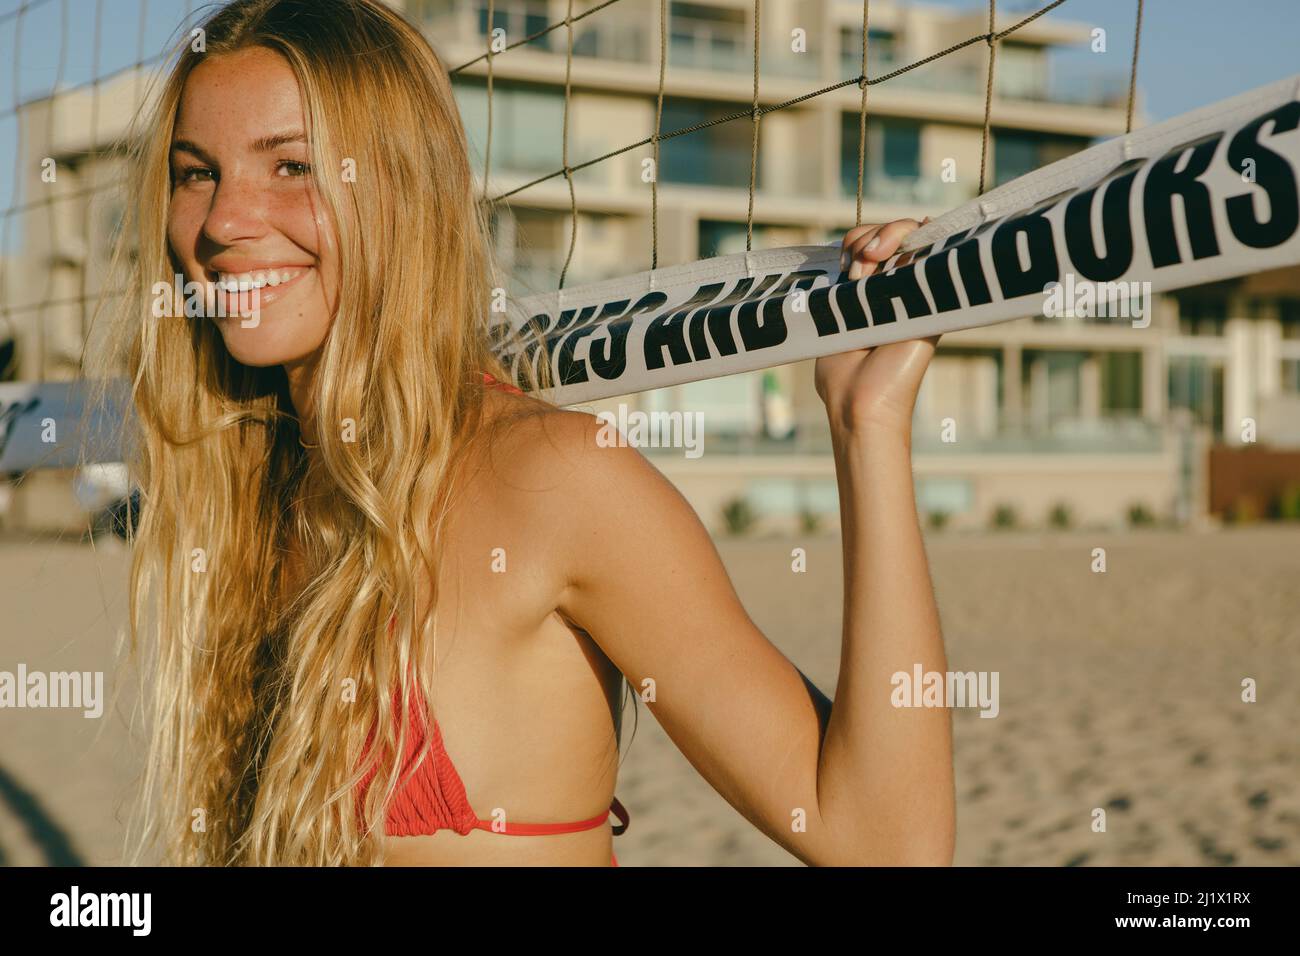 Blond California girl in Los Angeles. Film look. Stock Photo